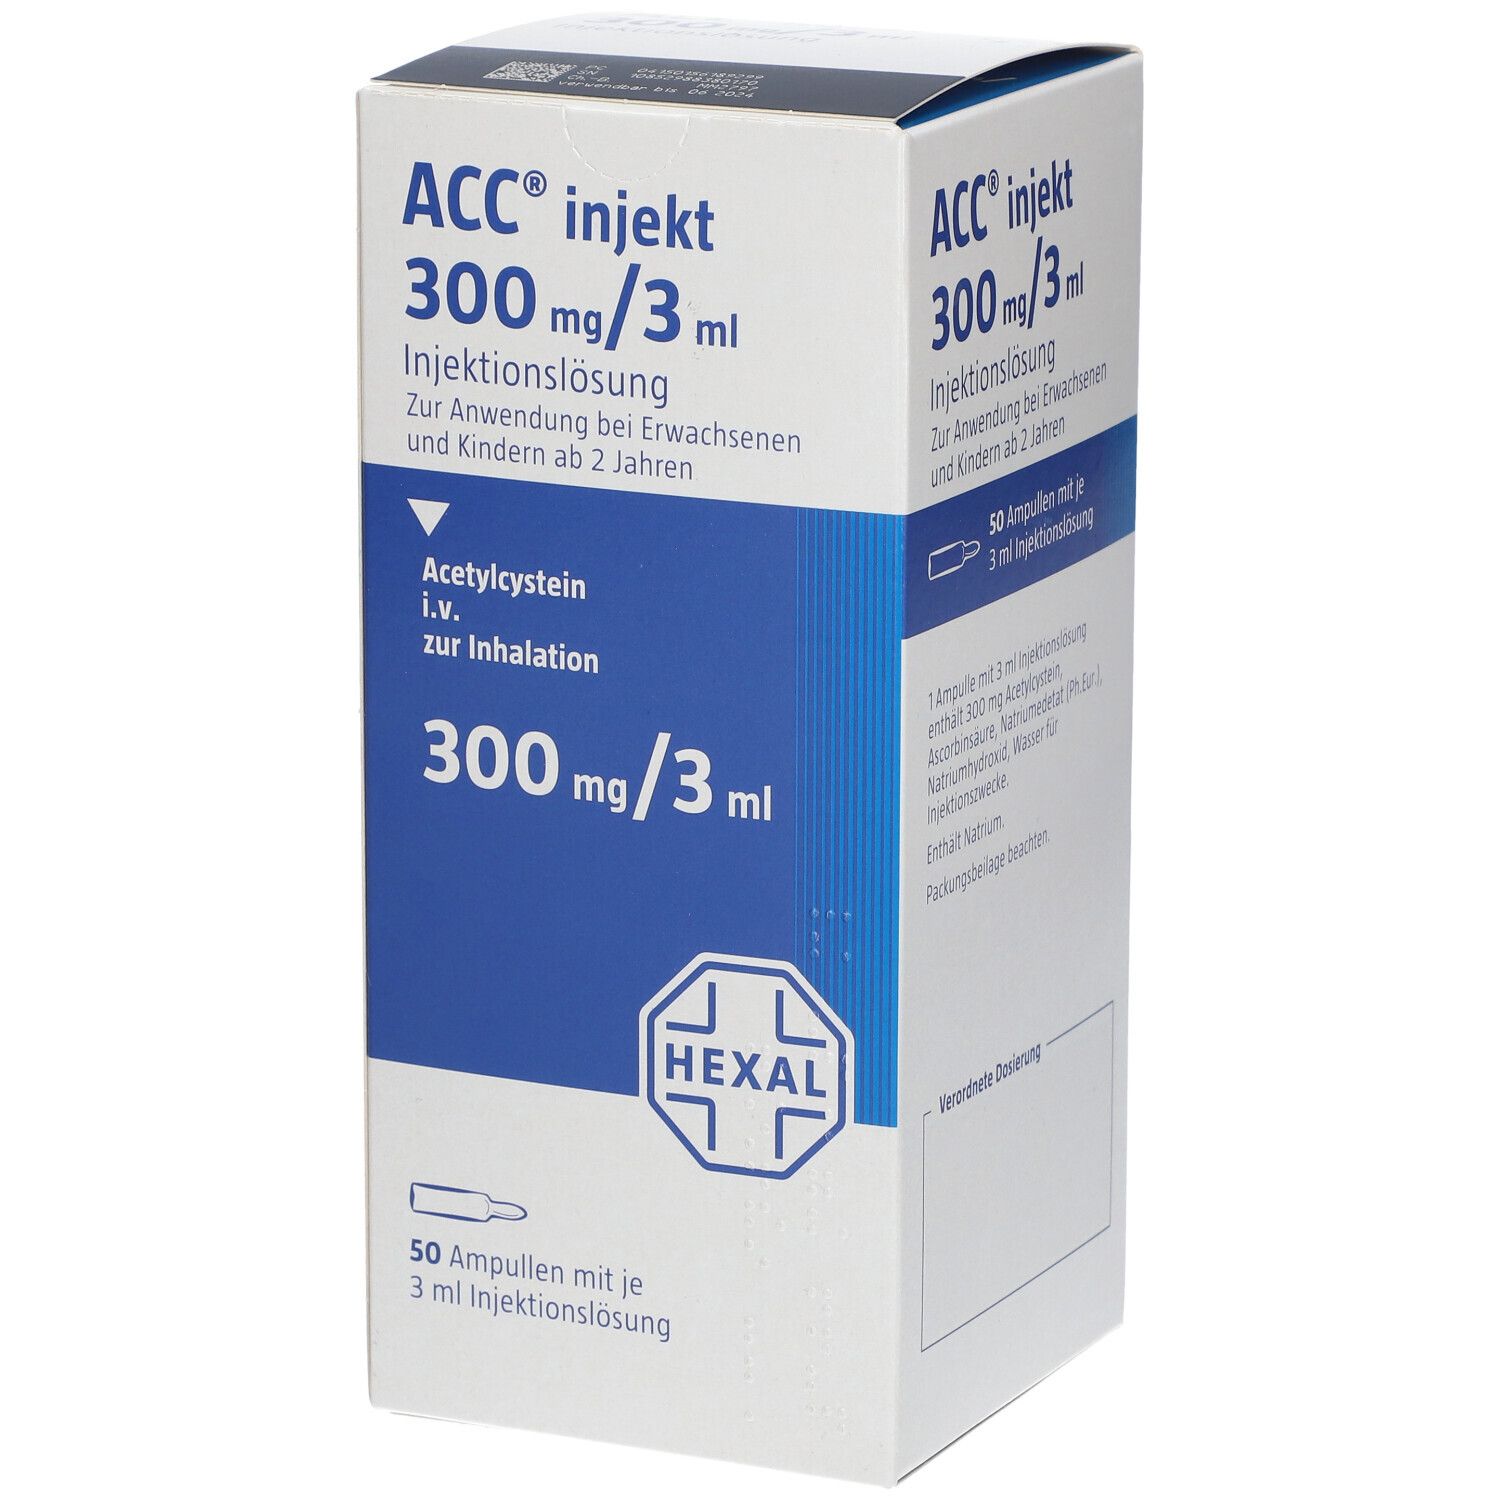 ACC® injekt 300 mg/3 ml